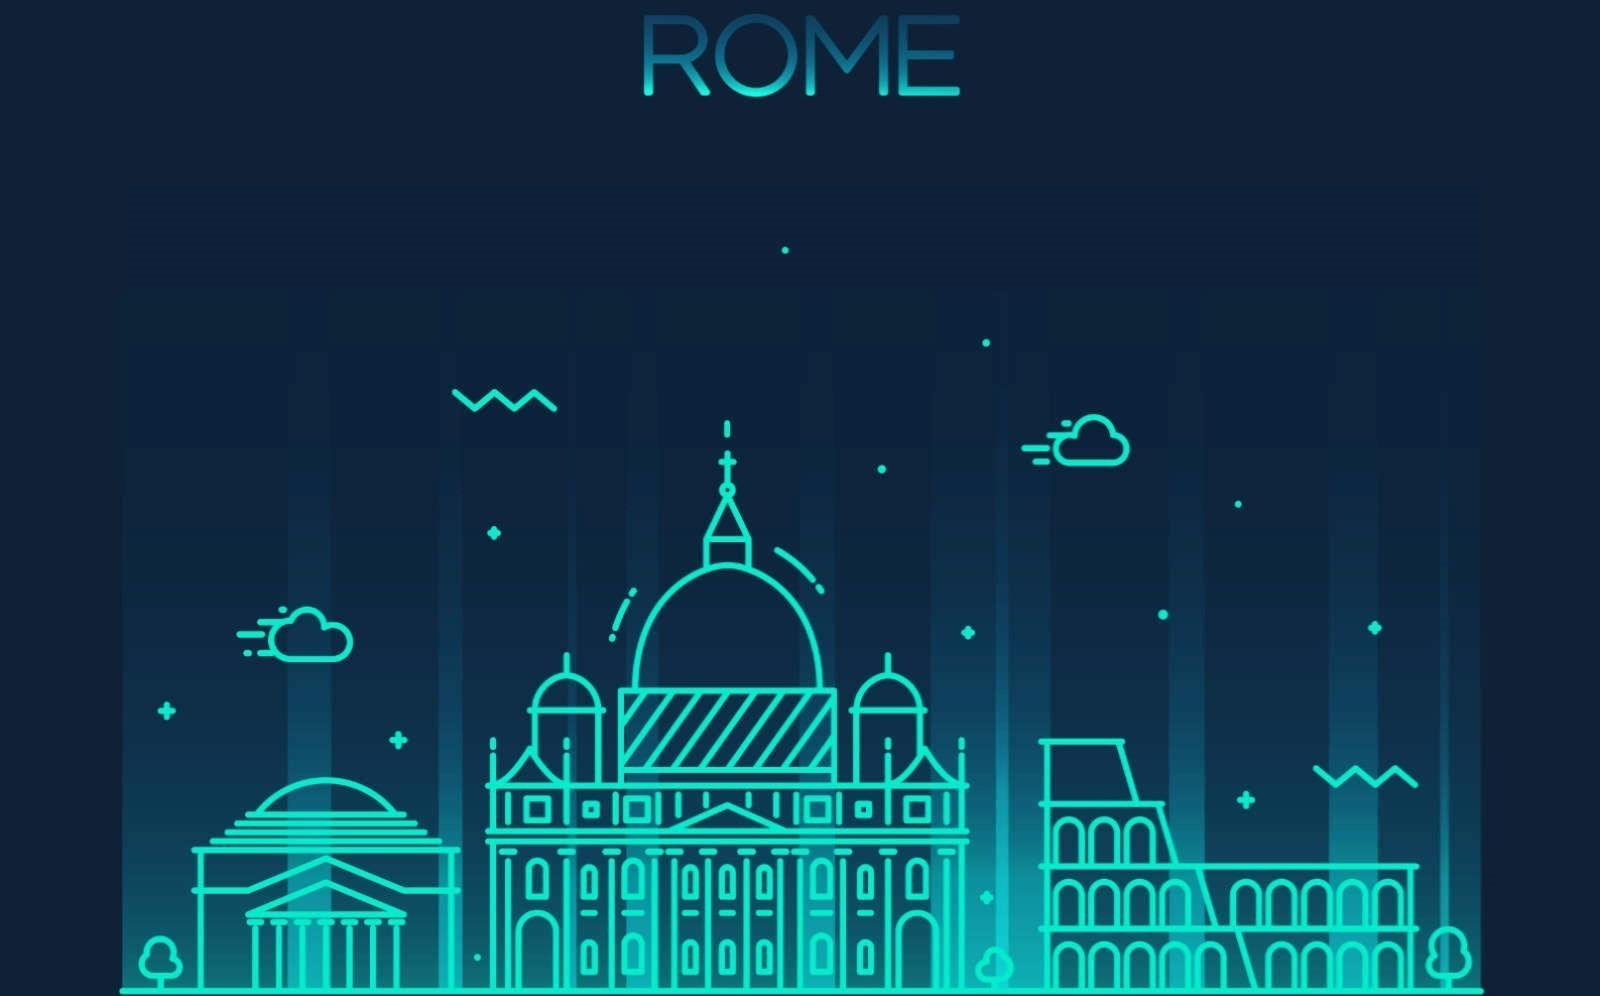 Rome City Hall Part 2